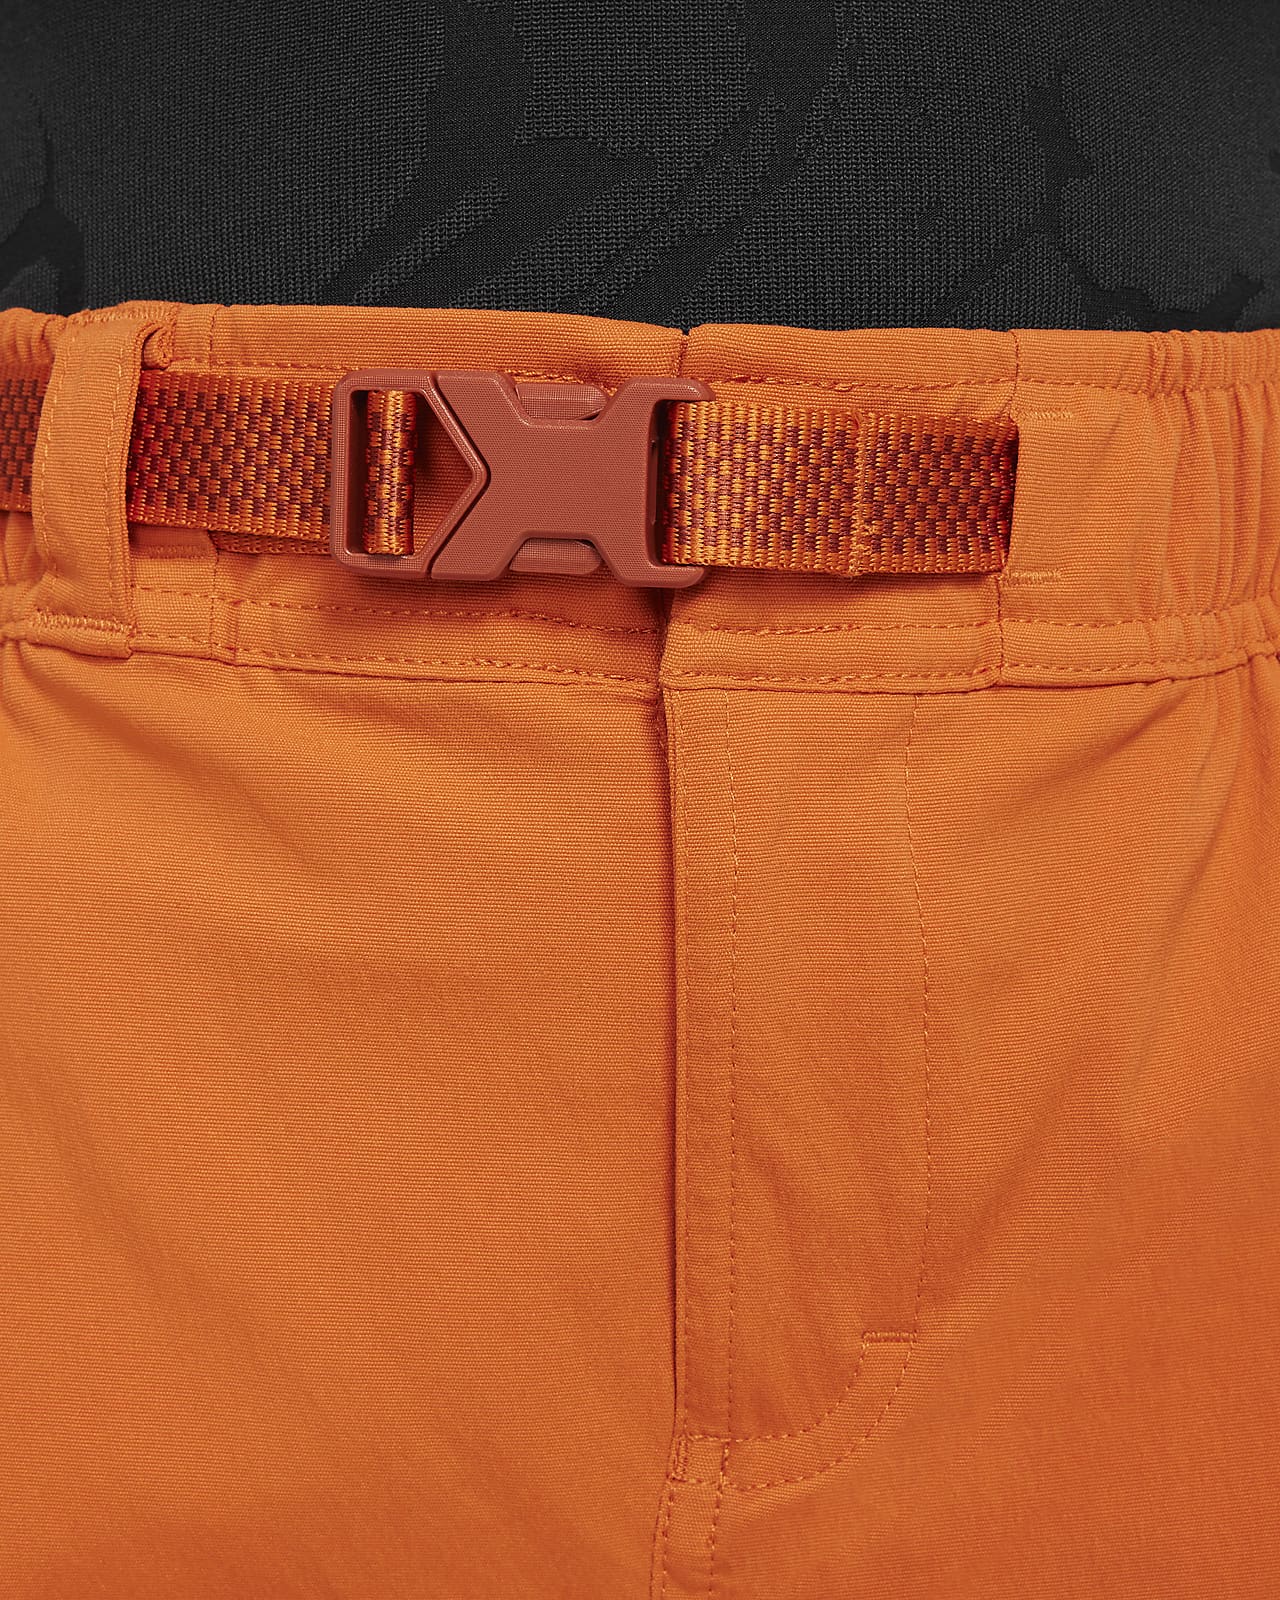 Forclaz Men's Mountain Trekking Convertible Trousers - Trek500 - Brown  (UK38 - EU46 (L34)) : Amazon.in: Clothing & Accessories